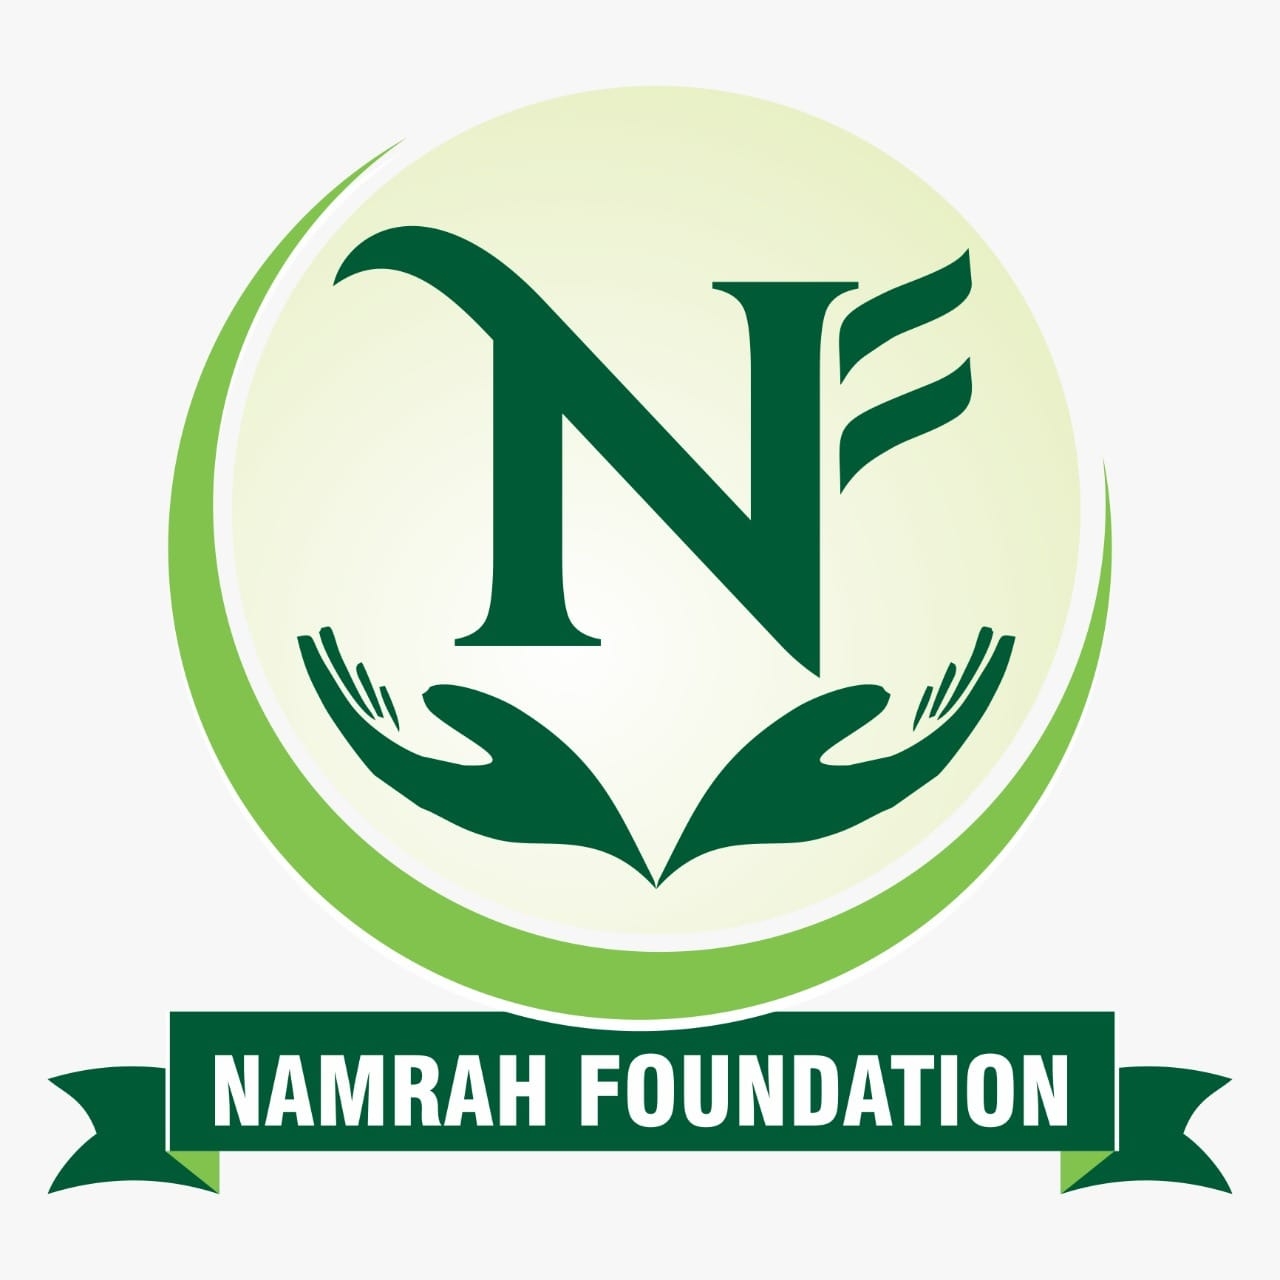 NAMRAH FOUNDATION